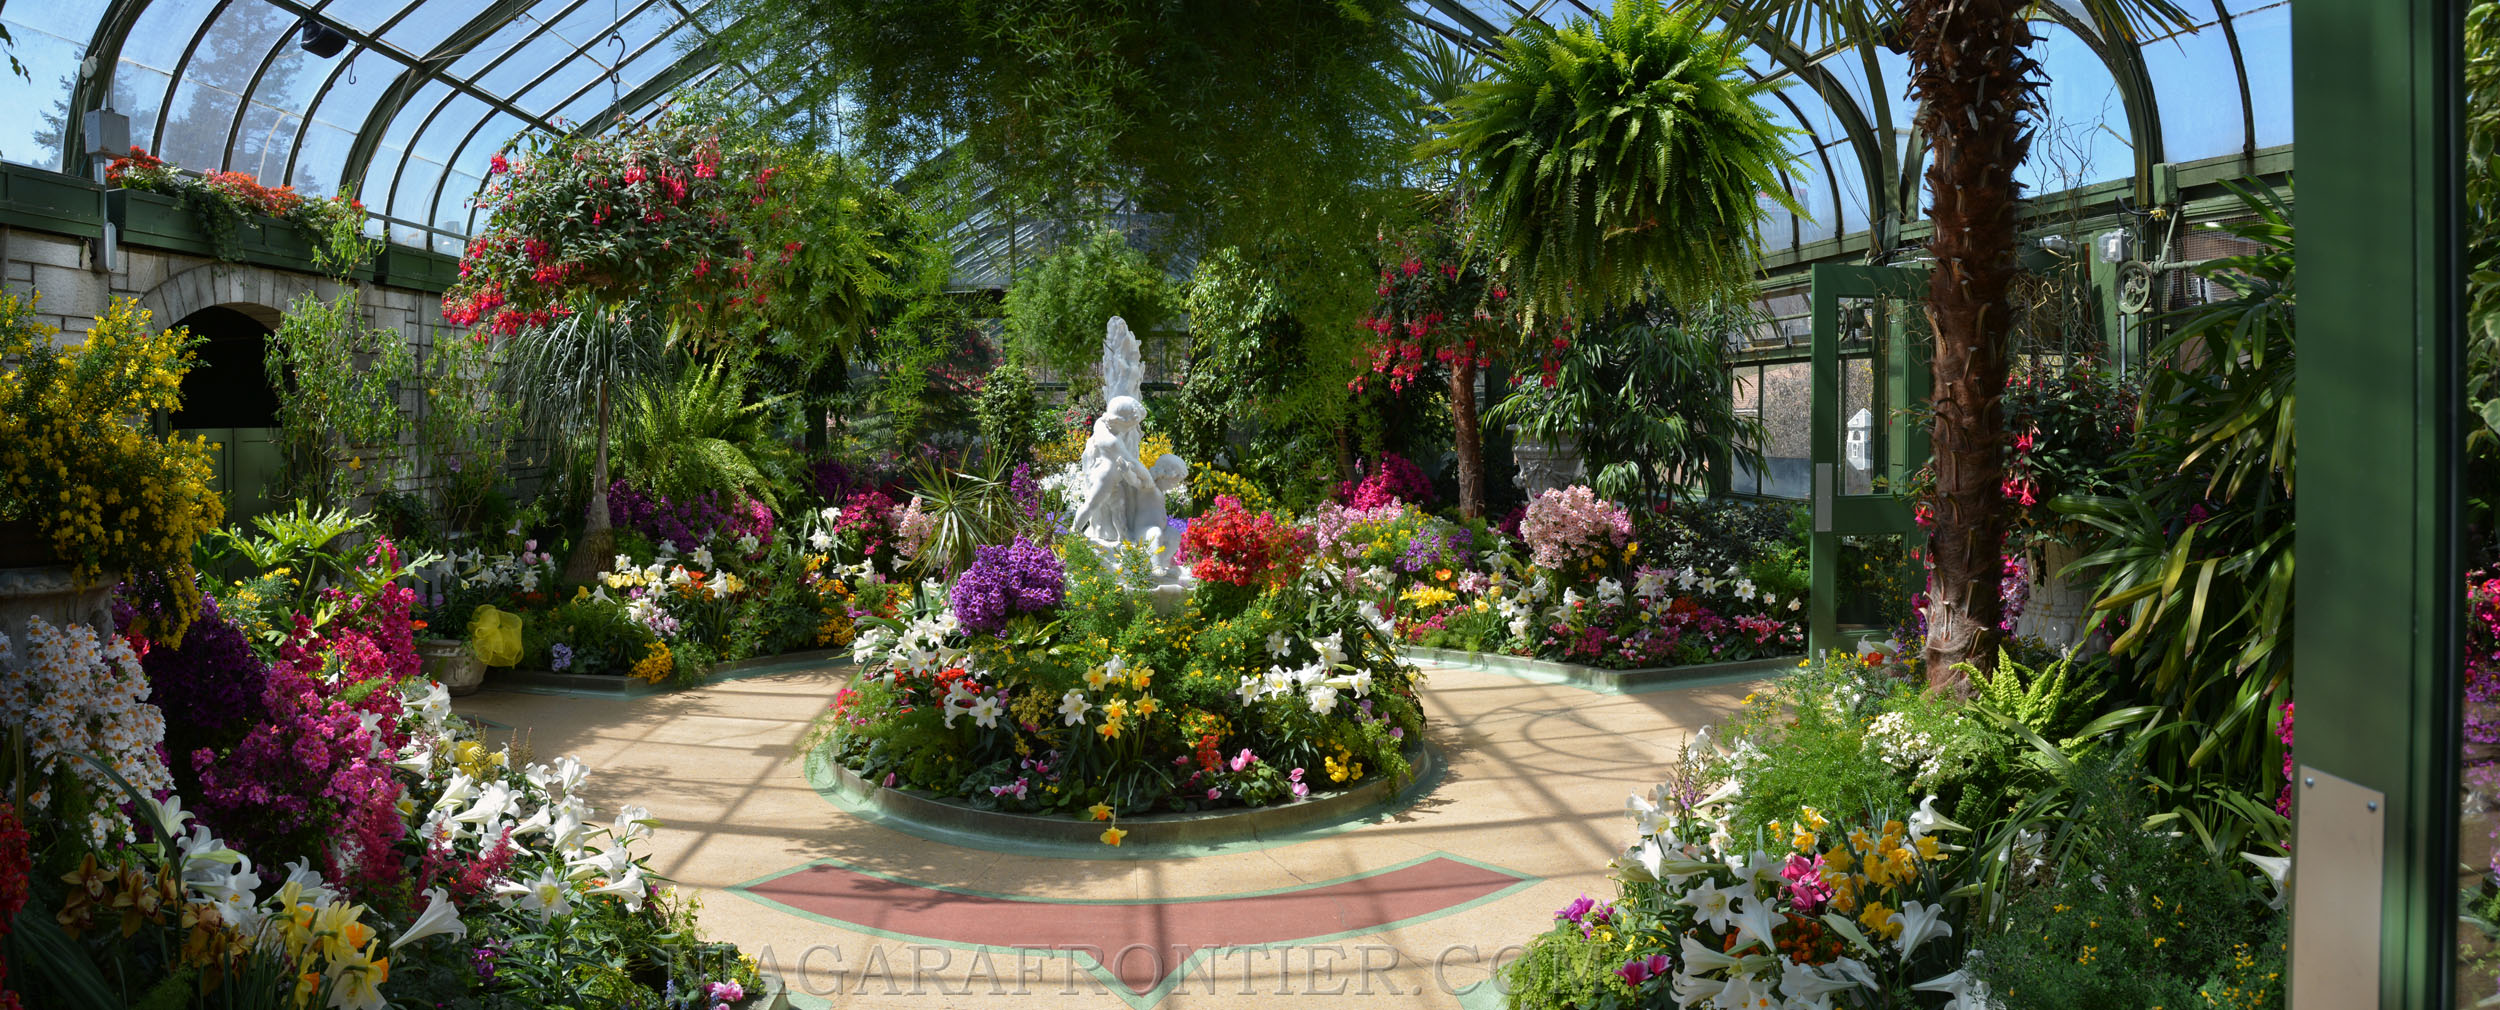 niagara falls - floral showhouse (greenhouse)